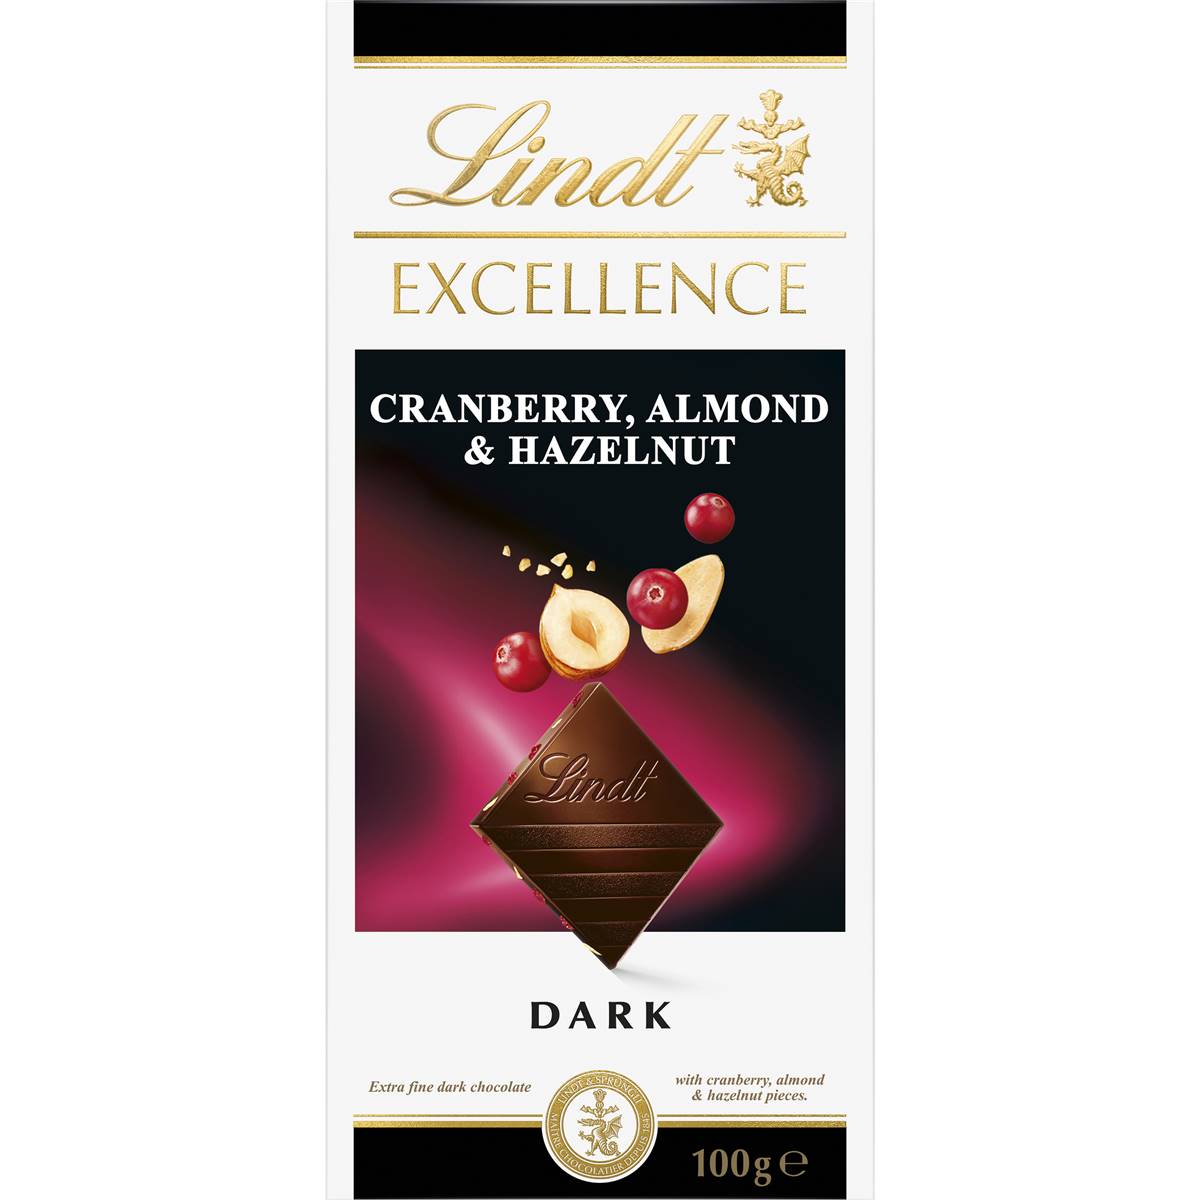 Calories in Lindt Excellence Cranberry, Almond & Hazelnut Dark Chocolate Block